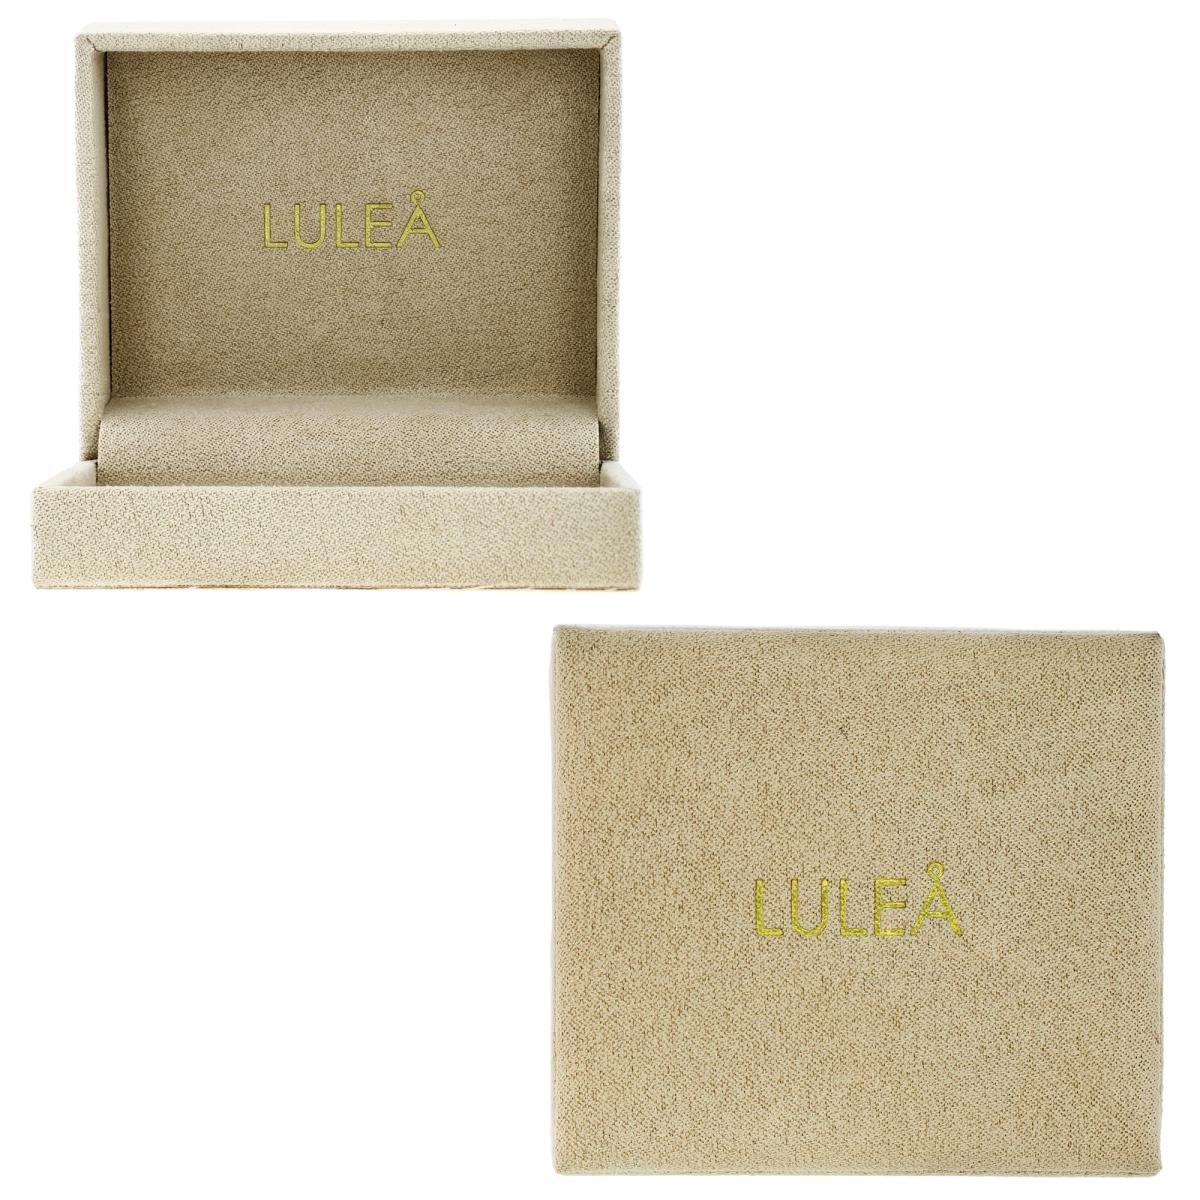 Lulea 75x70x35MM Taupe Suede Hinged Box